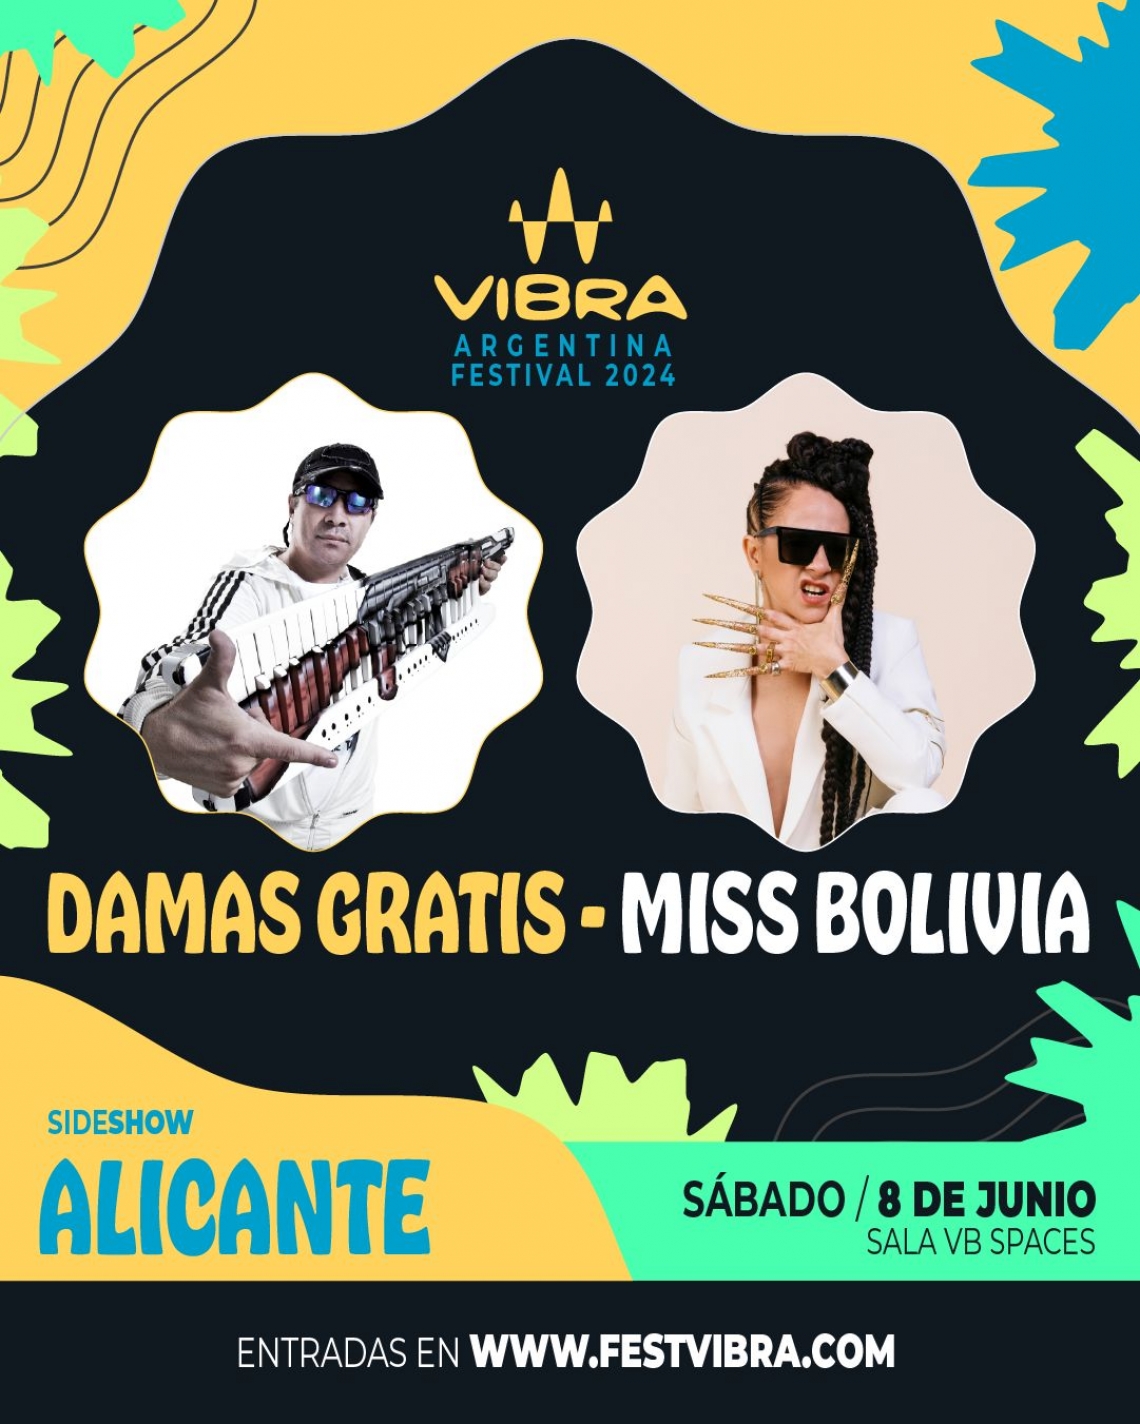 VIBRA Argentina Festival - Damas Gratis / Miss Bolivia